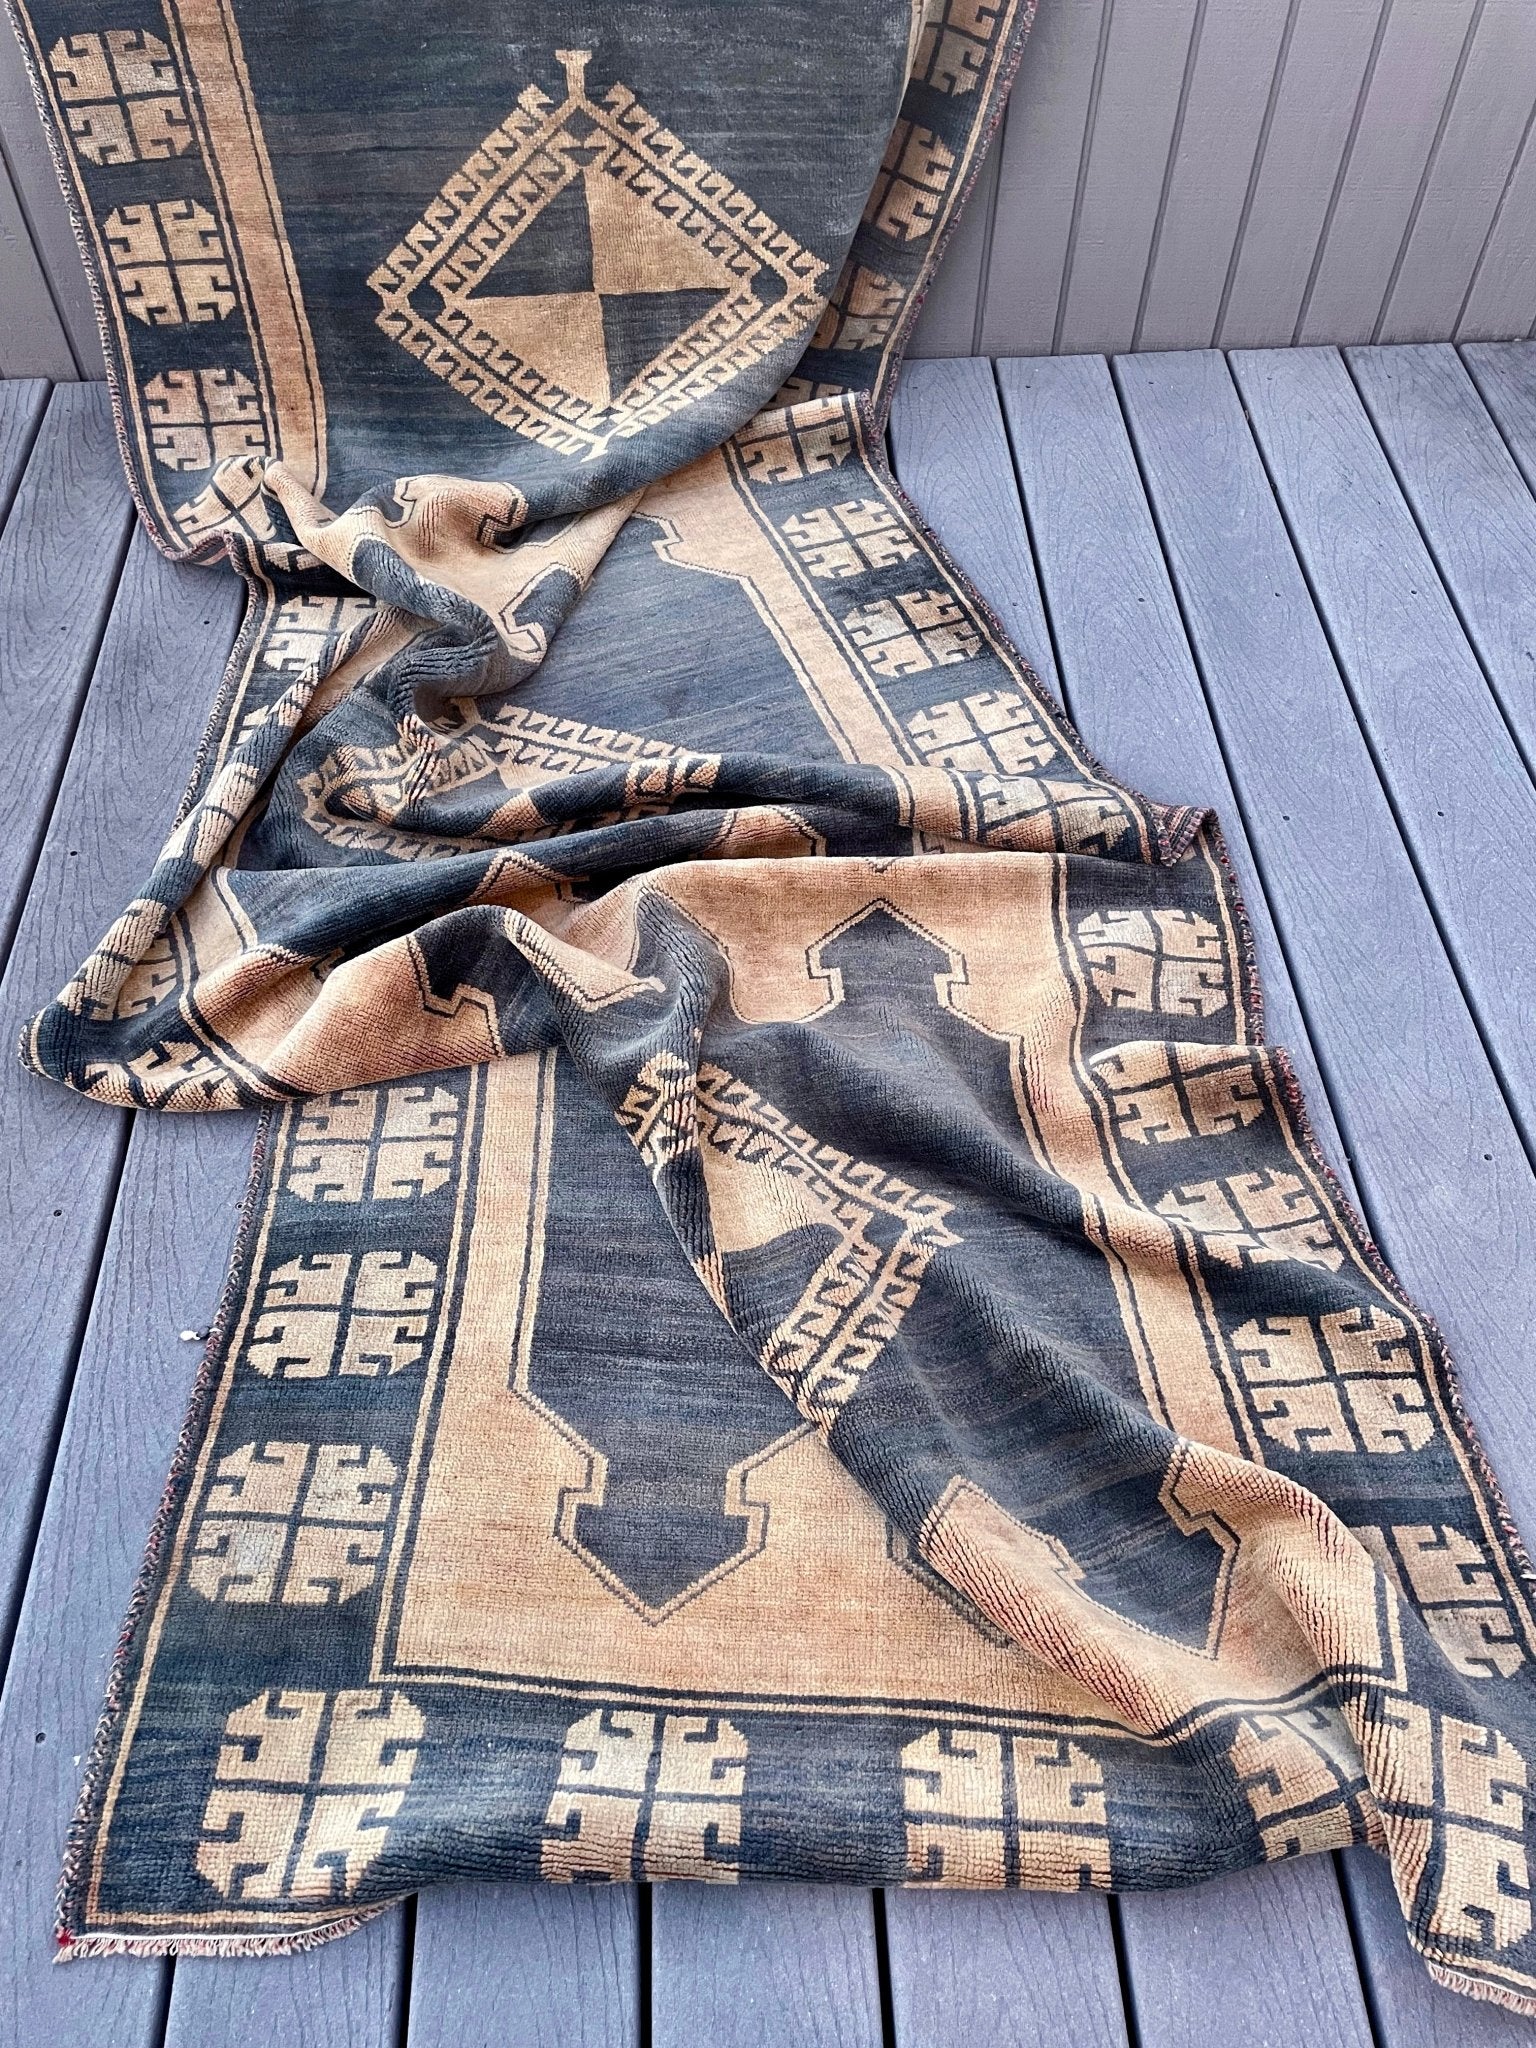 Turkish rug vintage wide runner rug. Oriental rug shop berkeley palo alto. Buy turkish rug online san francisco bay area